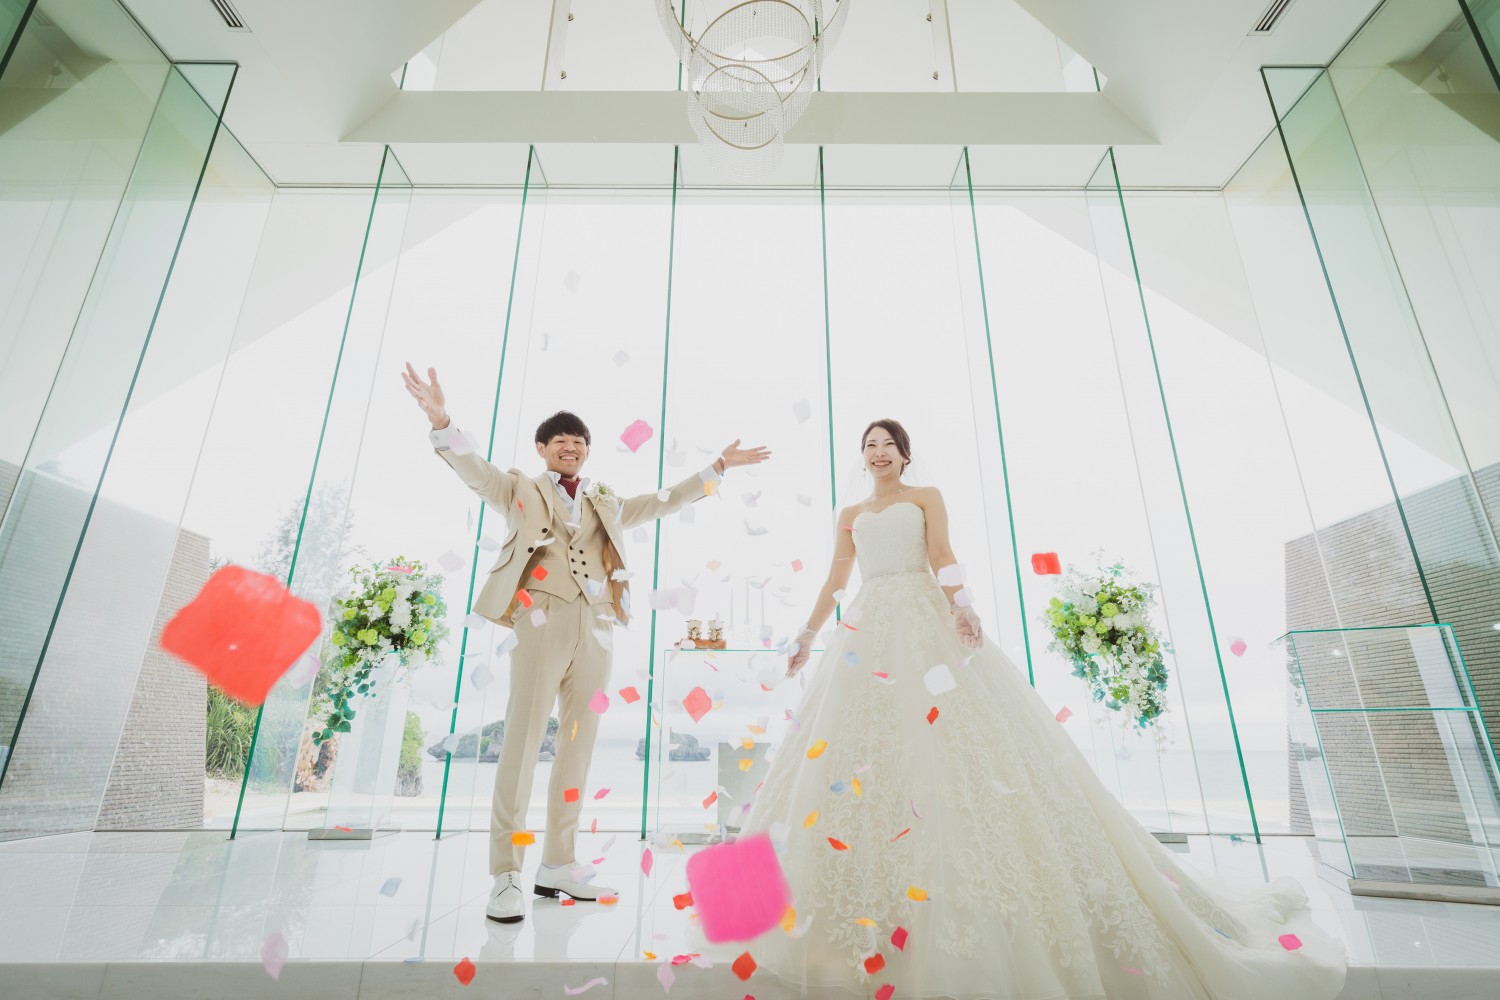 「Happy Wedding」 アイネス ヴィラノッツェ 沖縄(名護市)